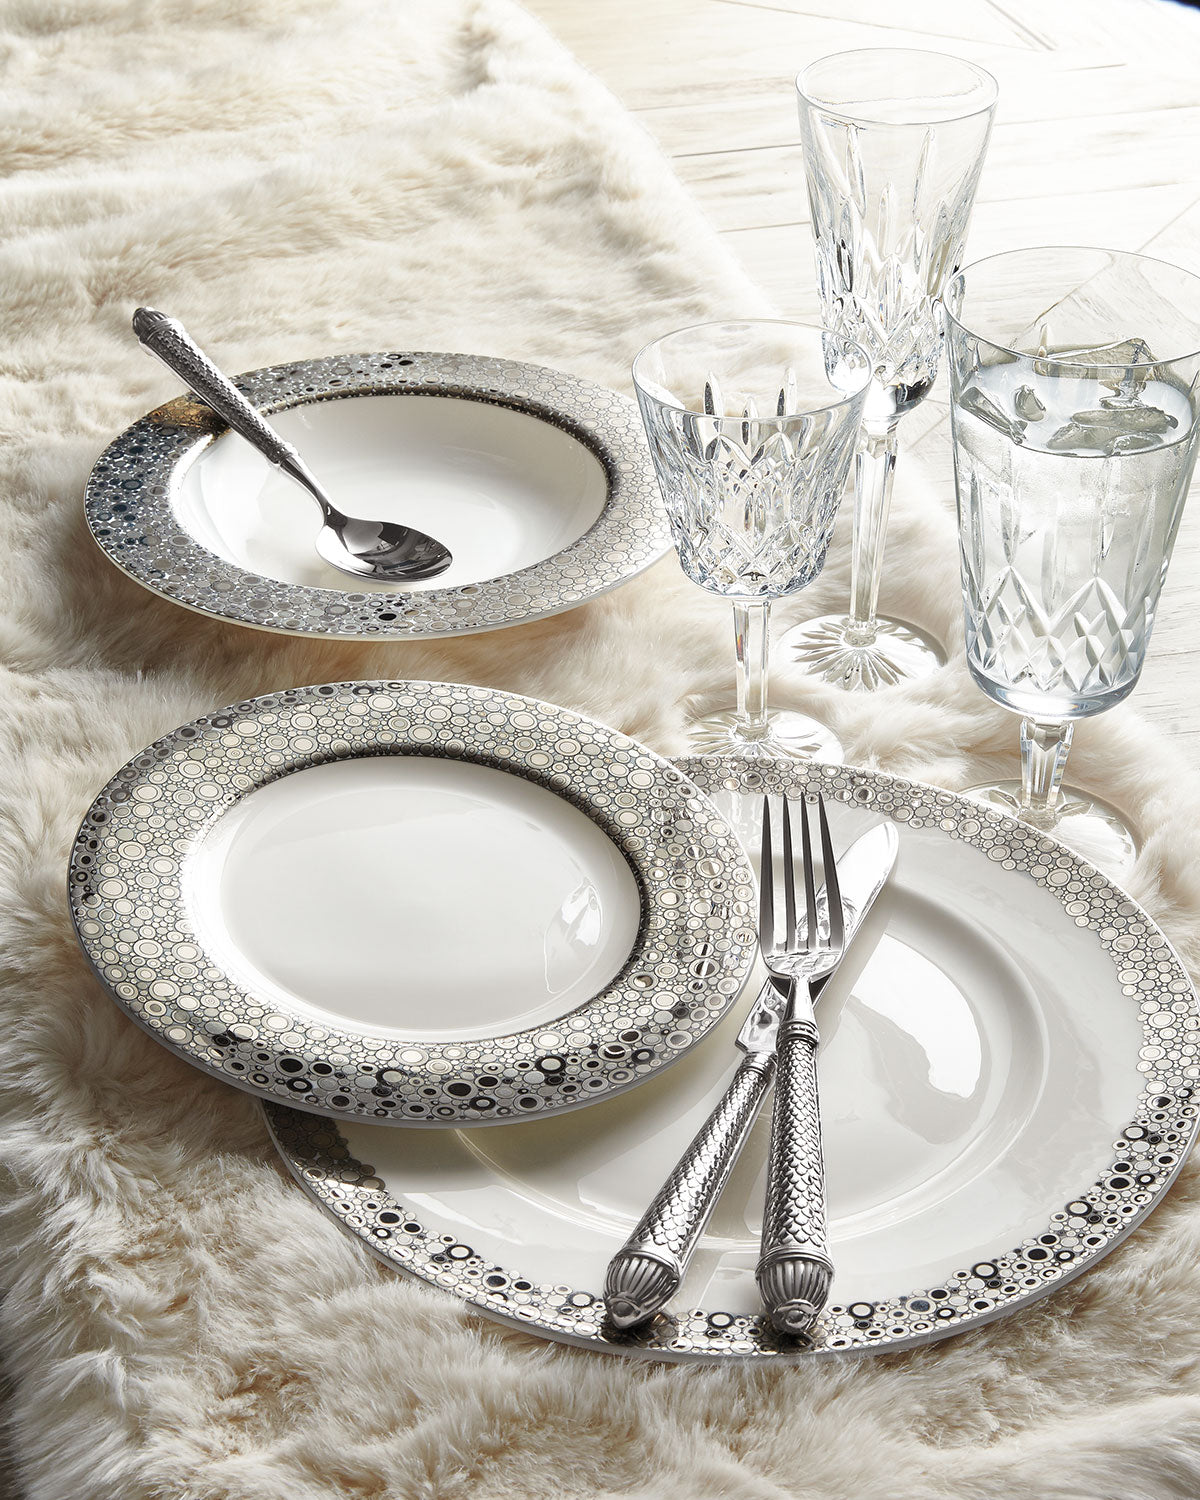 An Ellington Shine Platinum Simple Dinner Plate and silverware on a white rug by Caskata Artisanal Home.